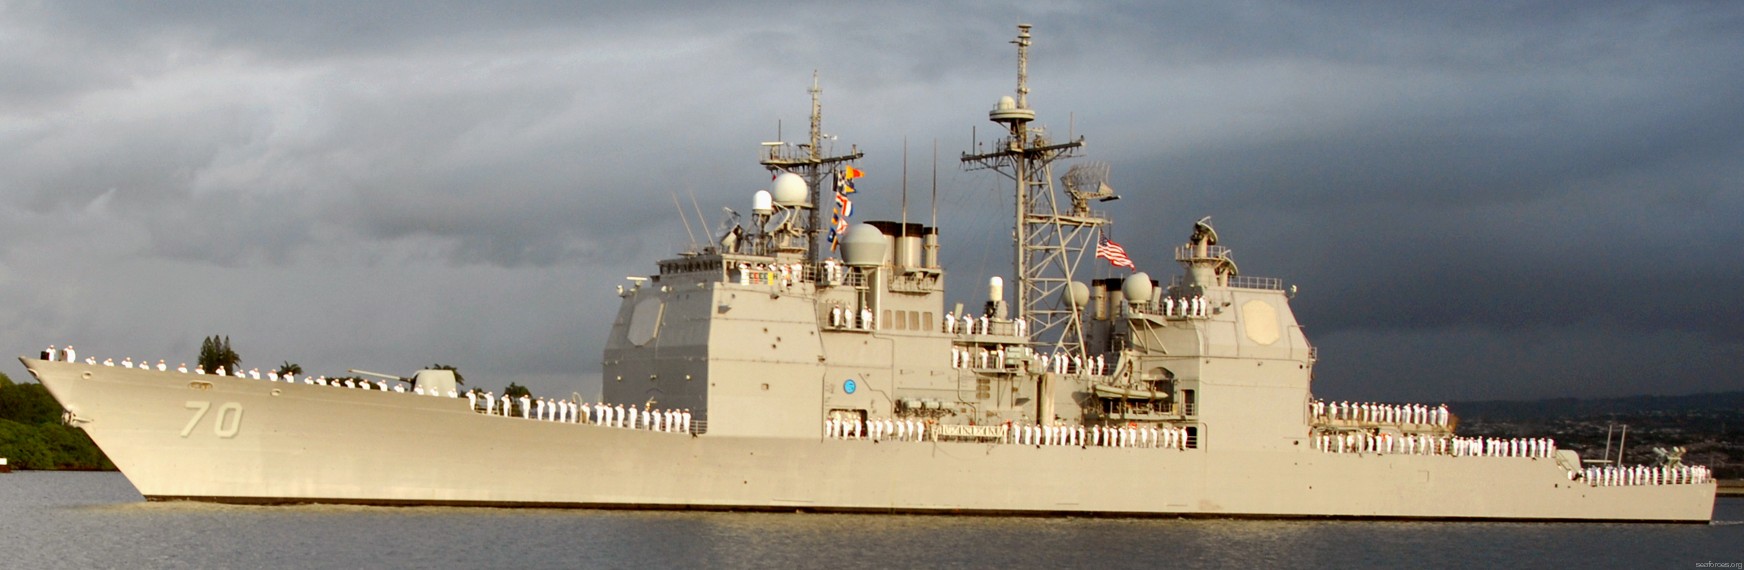 cg-70 uss lake erie ticonderoga class guided missile cruiser navy 53